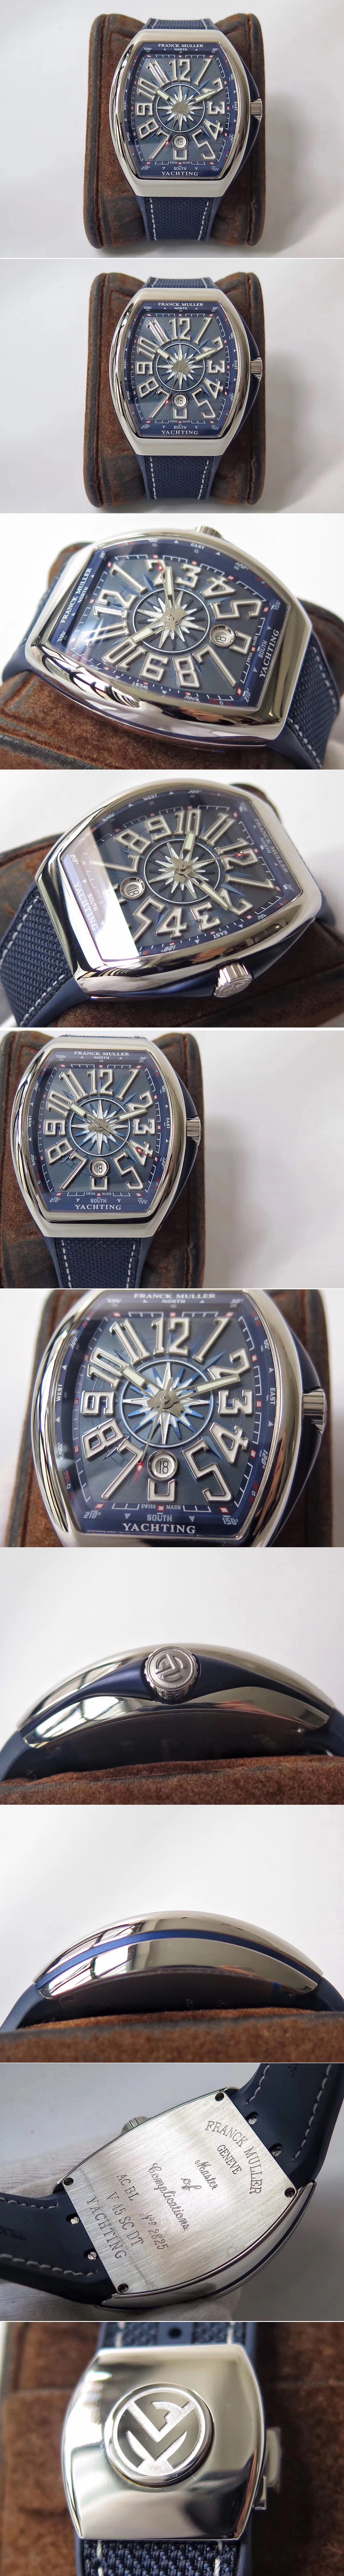 Replica Franck Muller Watches